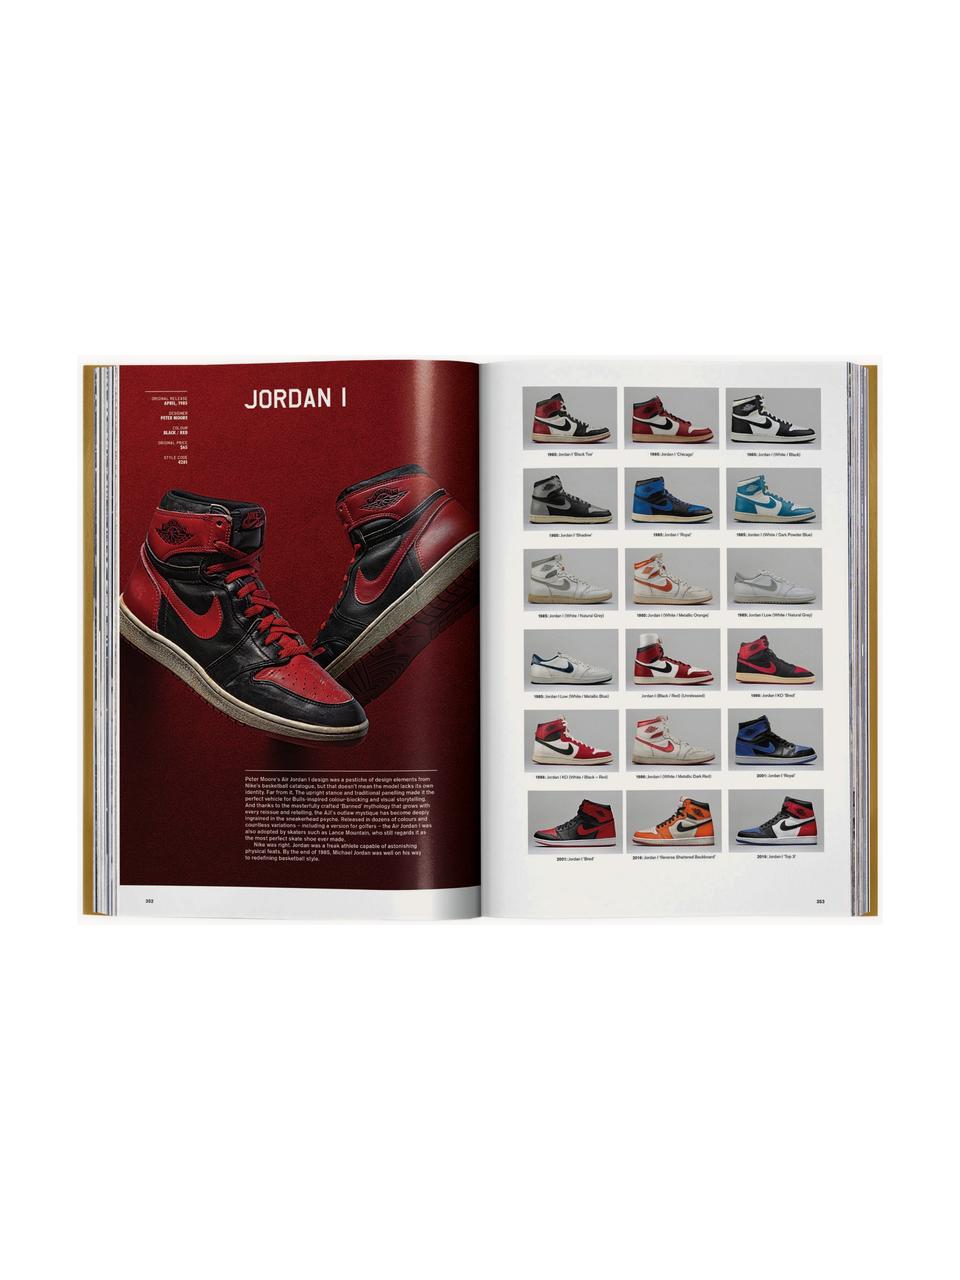 Libro illustrato Sneaker Freaker: The Ultimate Sneaker Book, Carta, cornice rigida, Sneaker Freaker, Larg. 21 x Alt. 32 cm